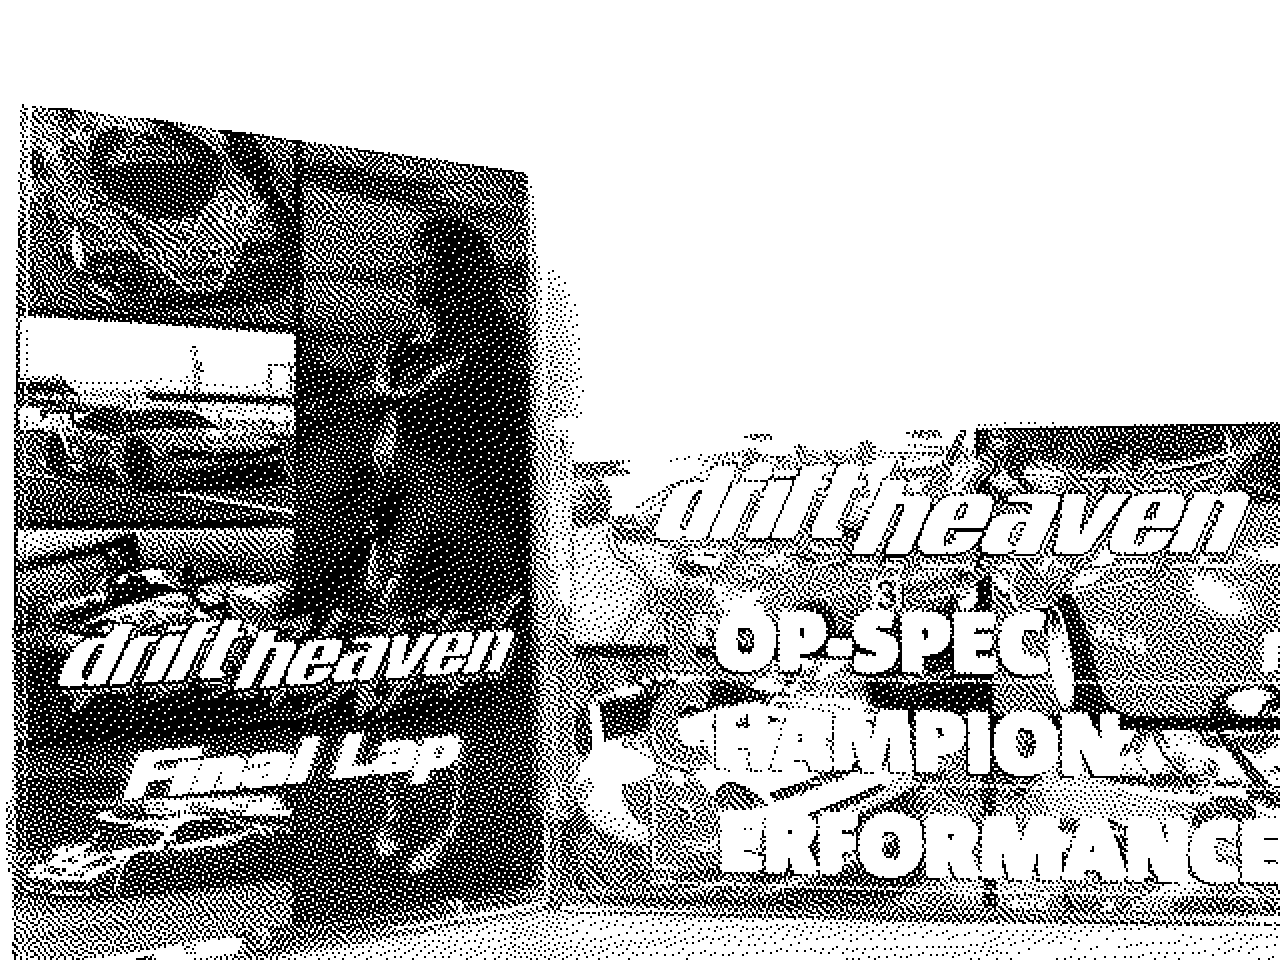 Cassette copies of Drift Heaven mixtapes